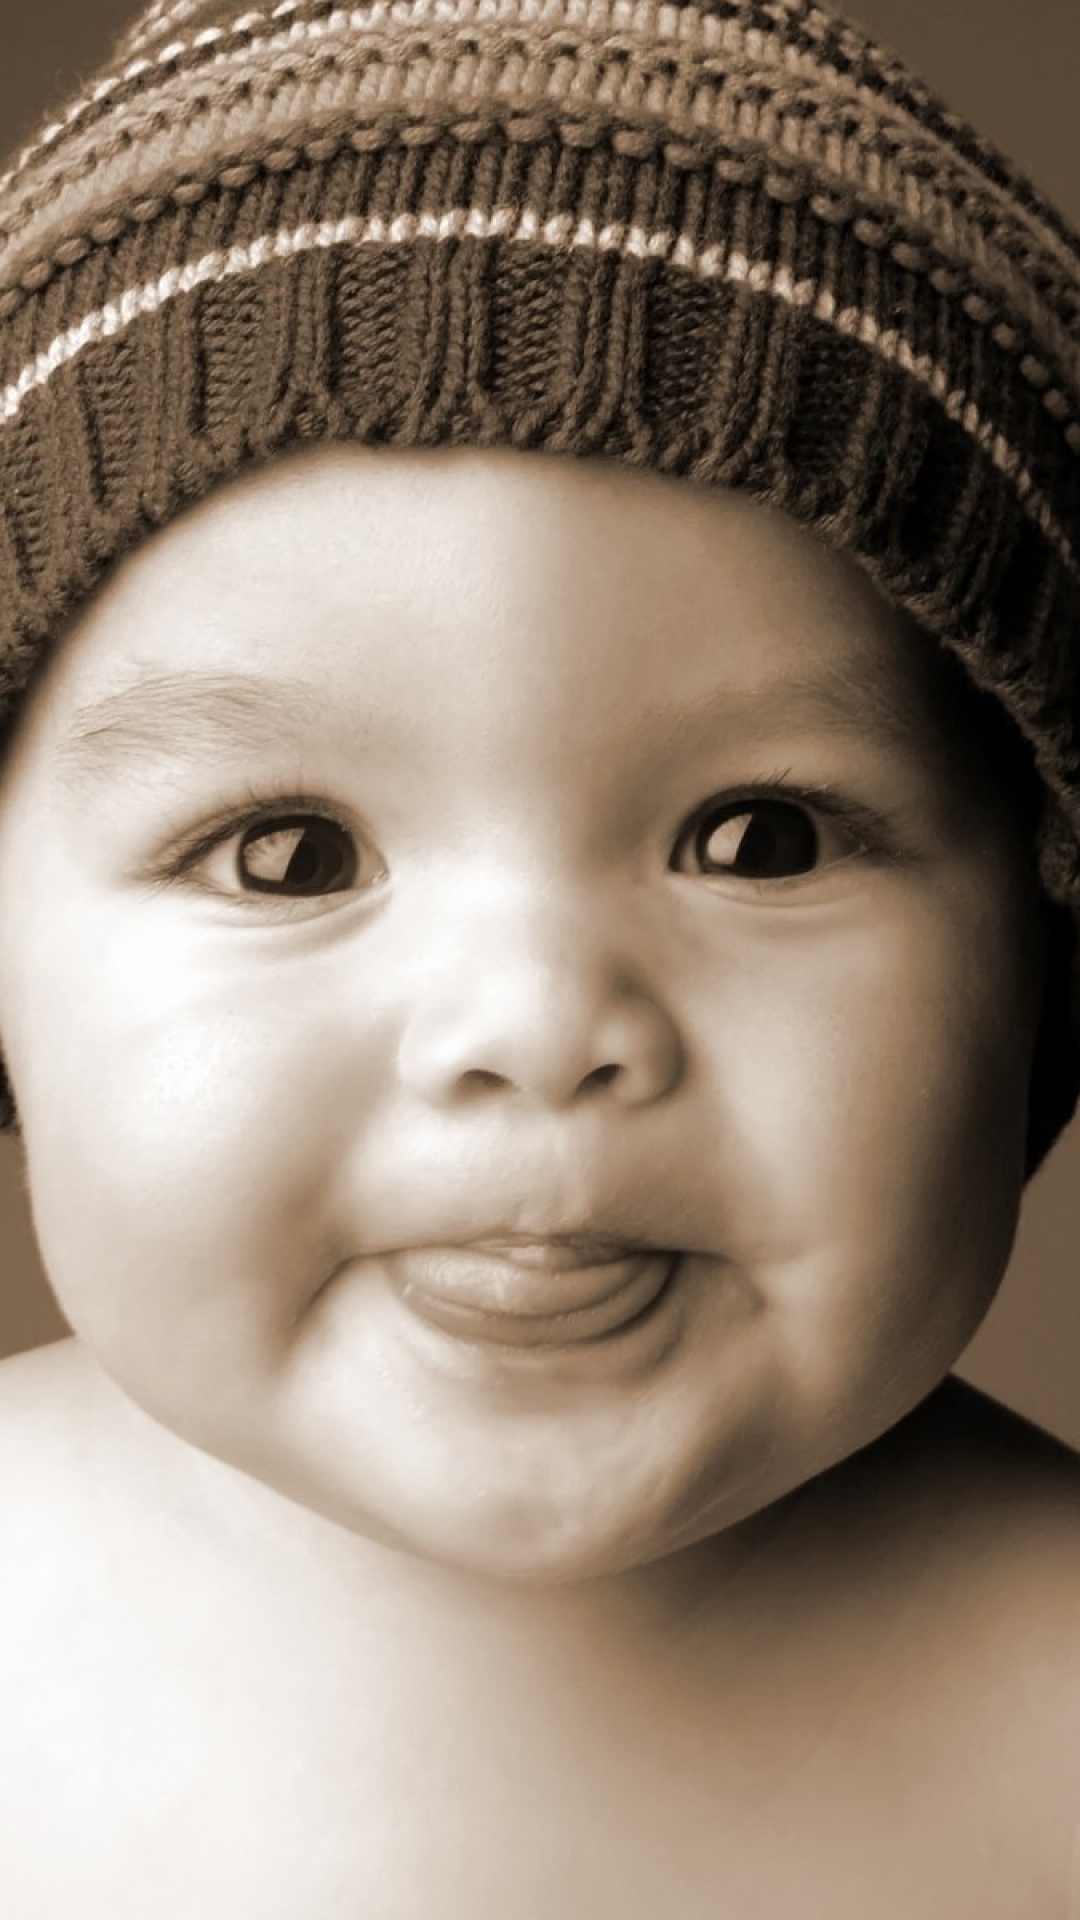 Cute Baby Wallpaper Hd Iphone 6 Plus - 1080x1920 Wallpaper 